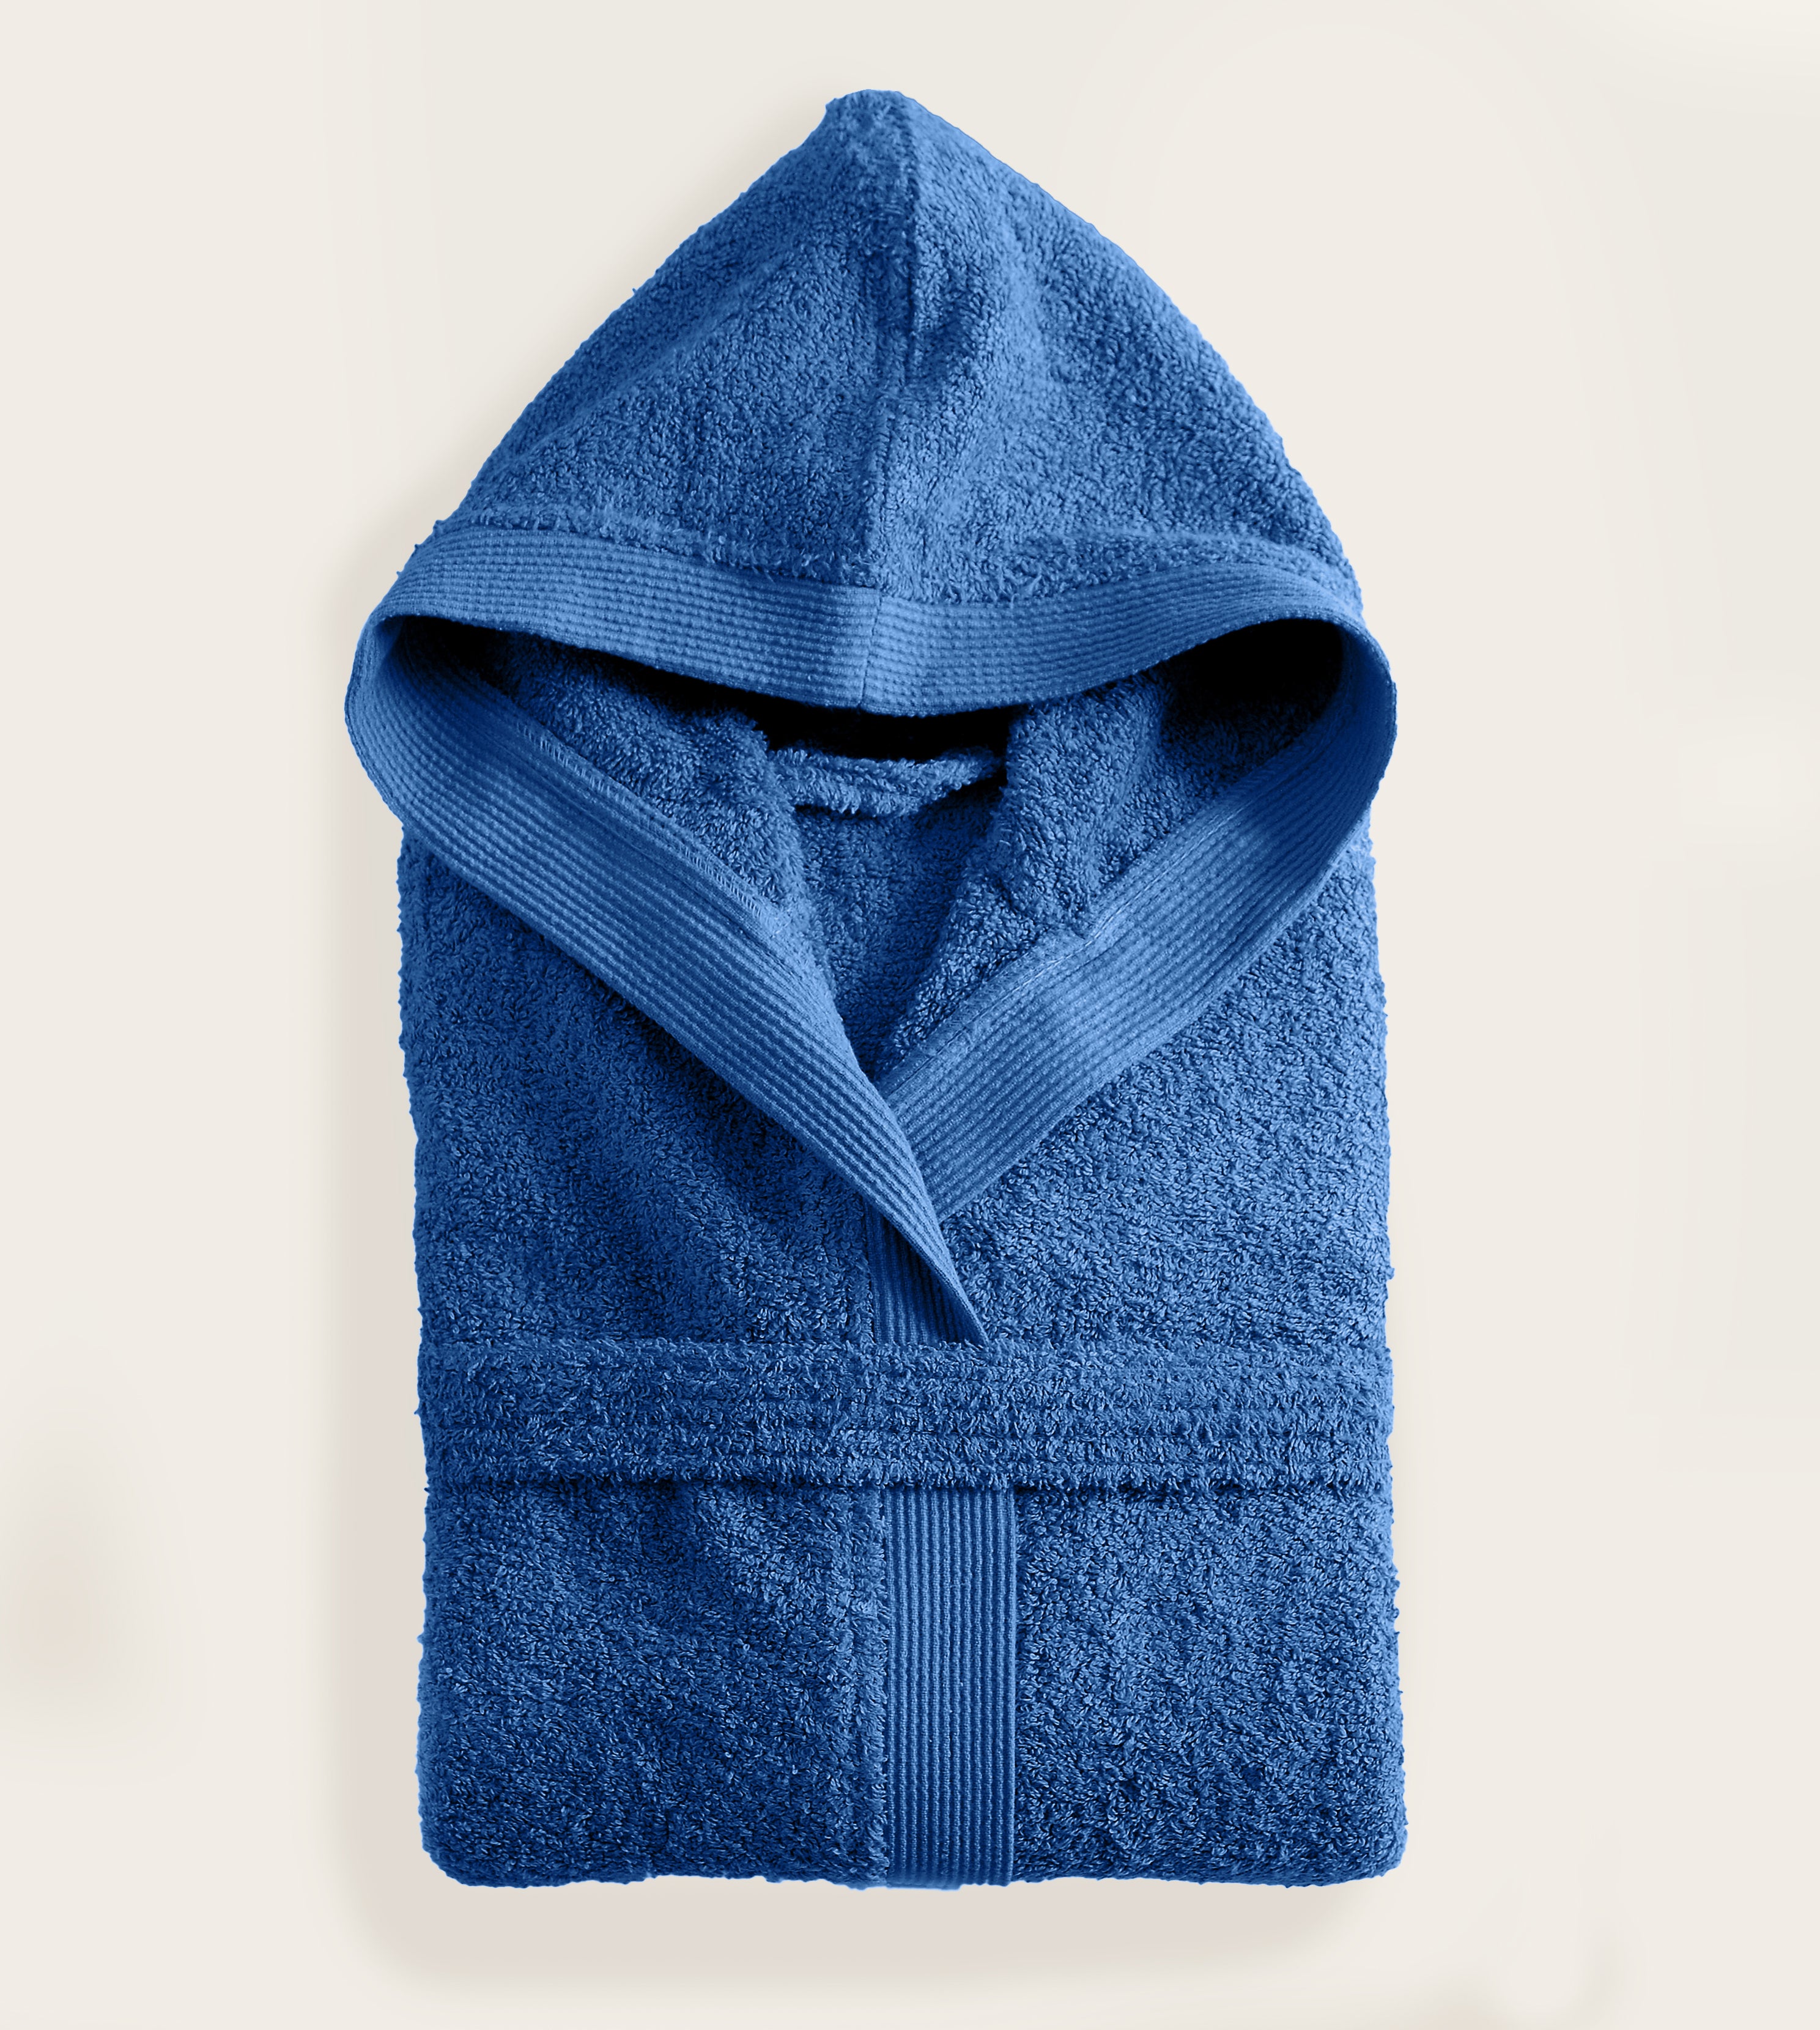 AMADEUS - Μπλε μπουρνούζι με κουκούλα από την εταιρεία Rythmos Home